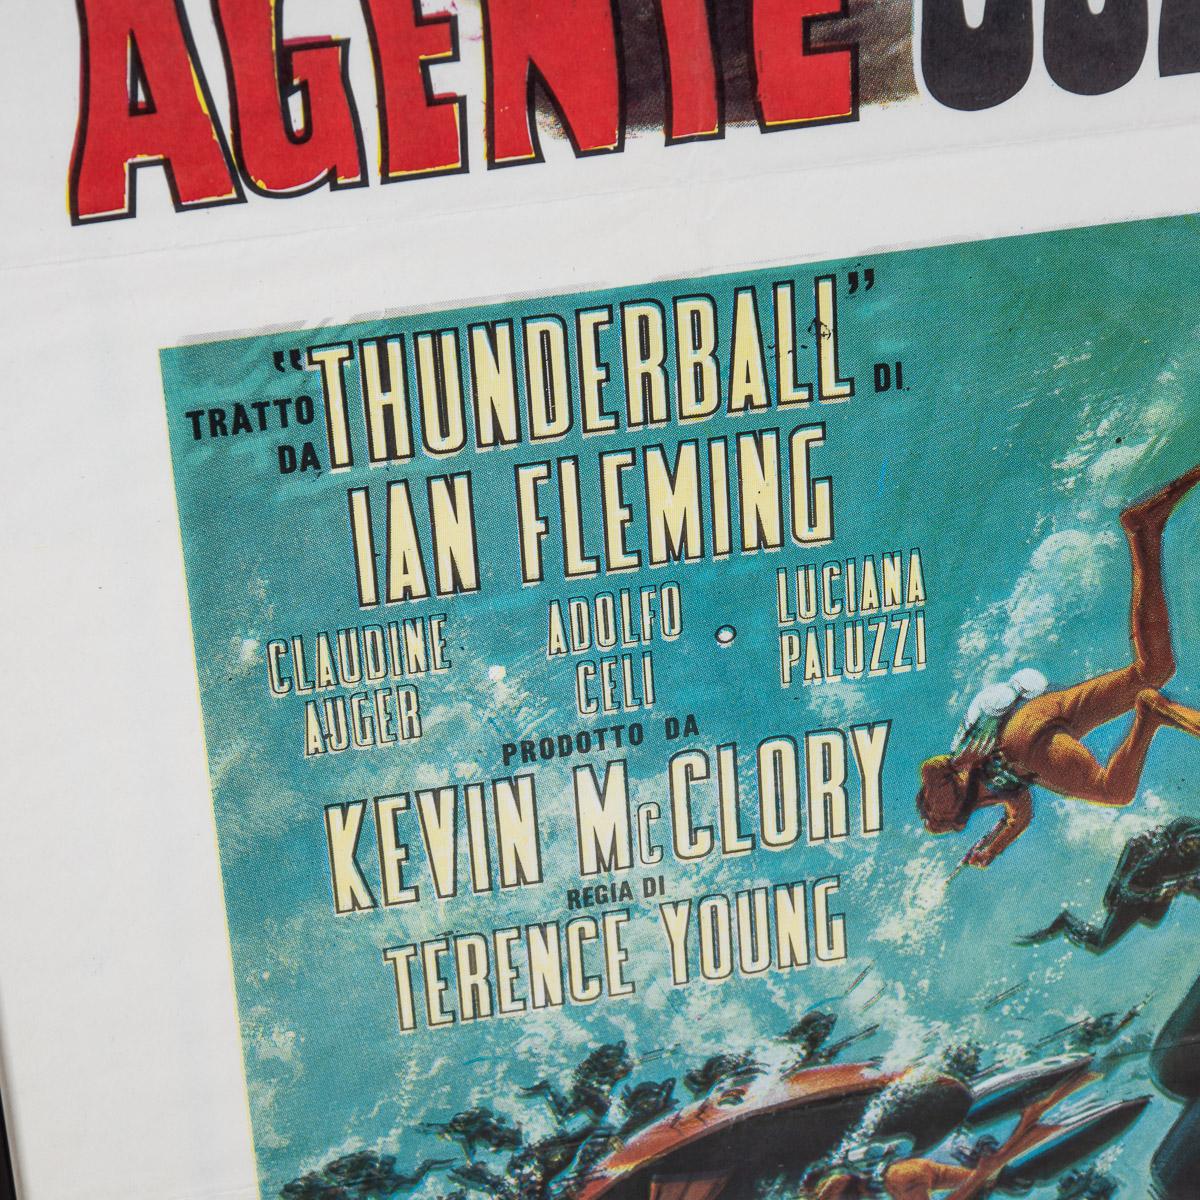 Original Italian Re-Release James Bond 'Thunderball' Poster, c.1971 For Sale 5